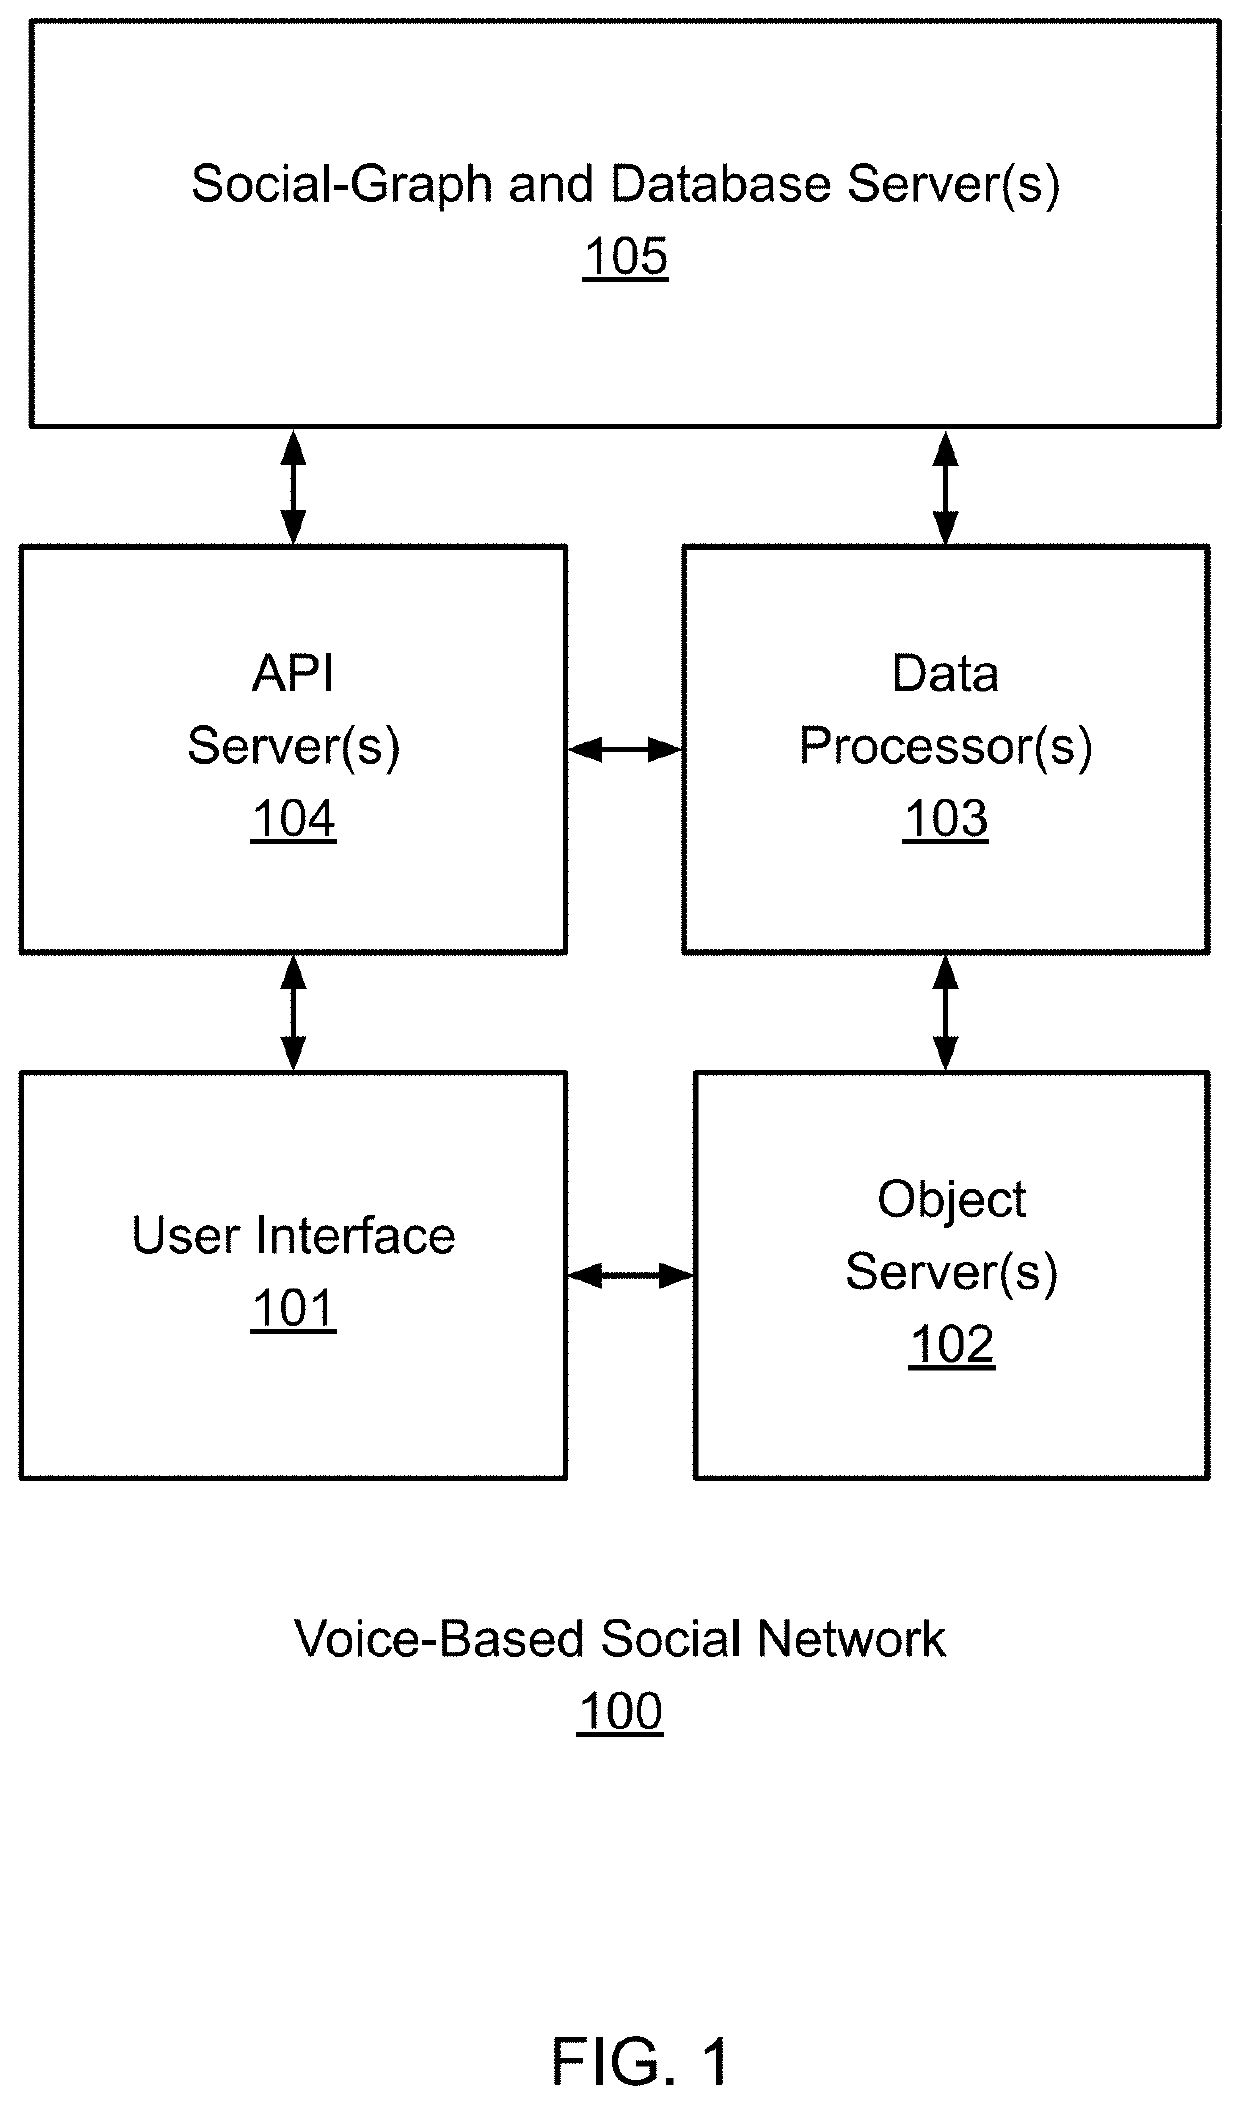 Voice-based social network